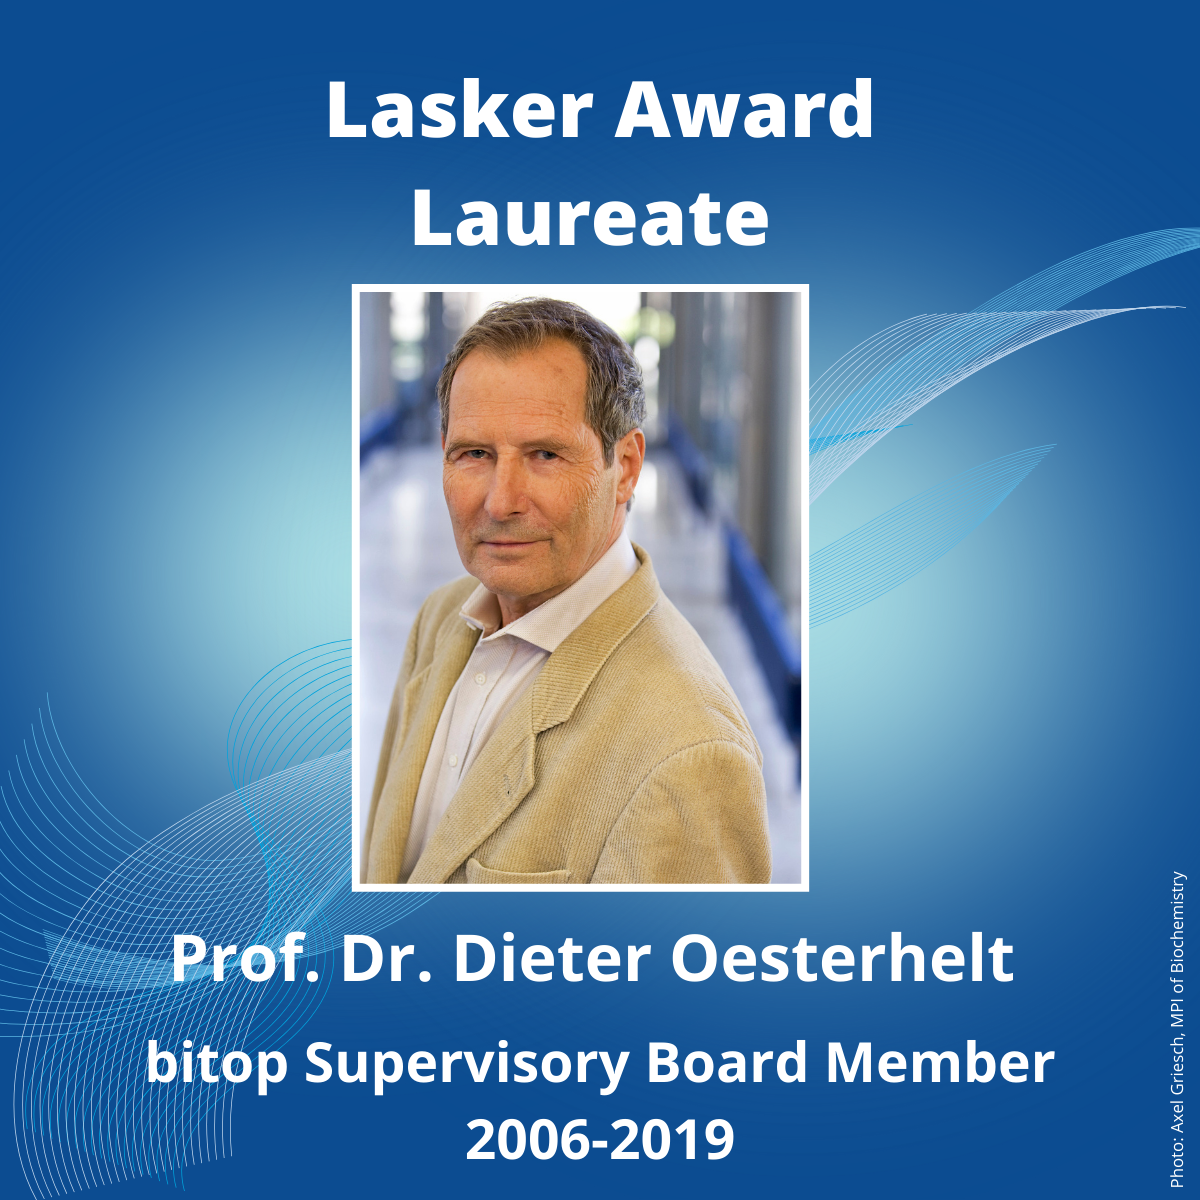 bitop Supervisory Board Member Prof. Dr. Dieter Oesterhelt wins Lasker Award